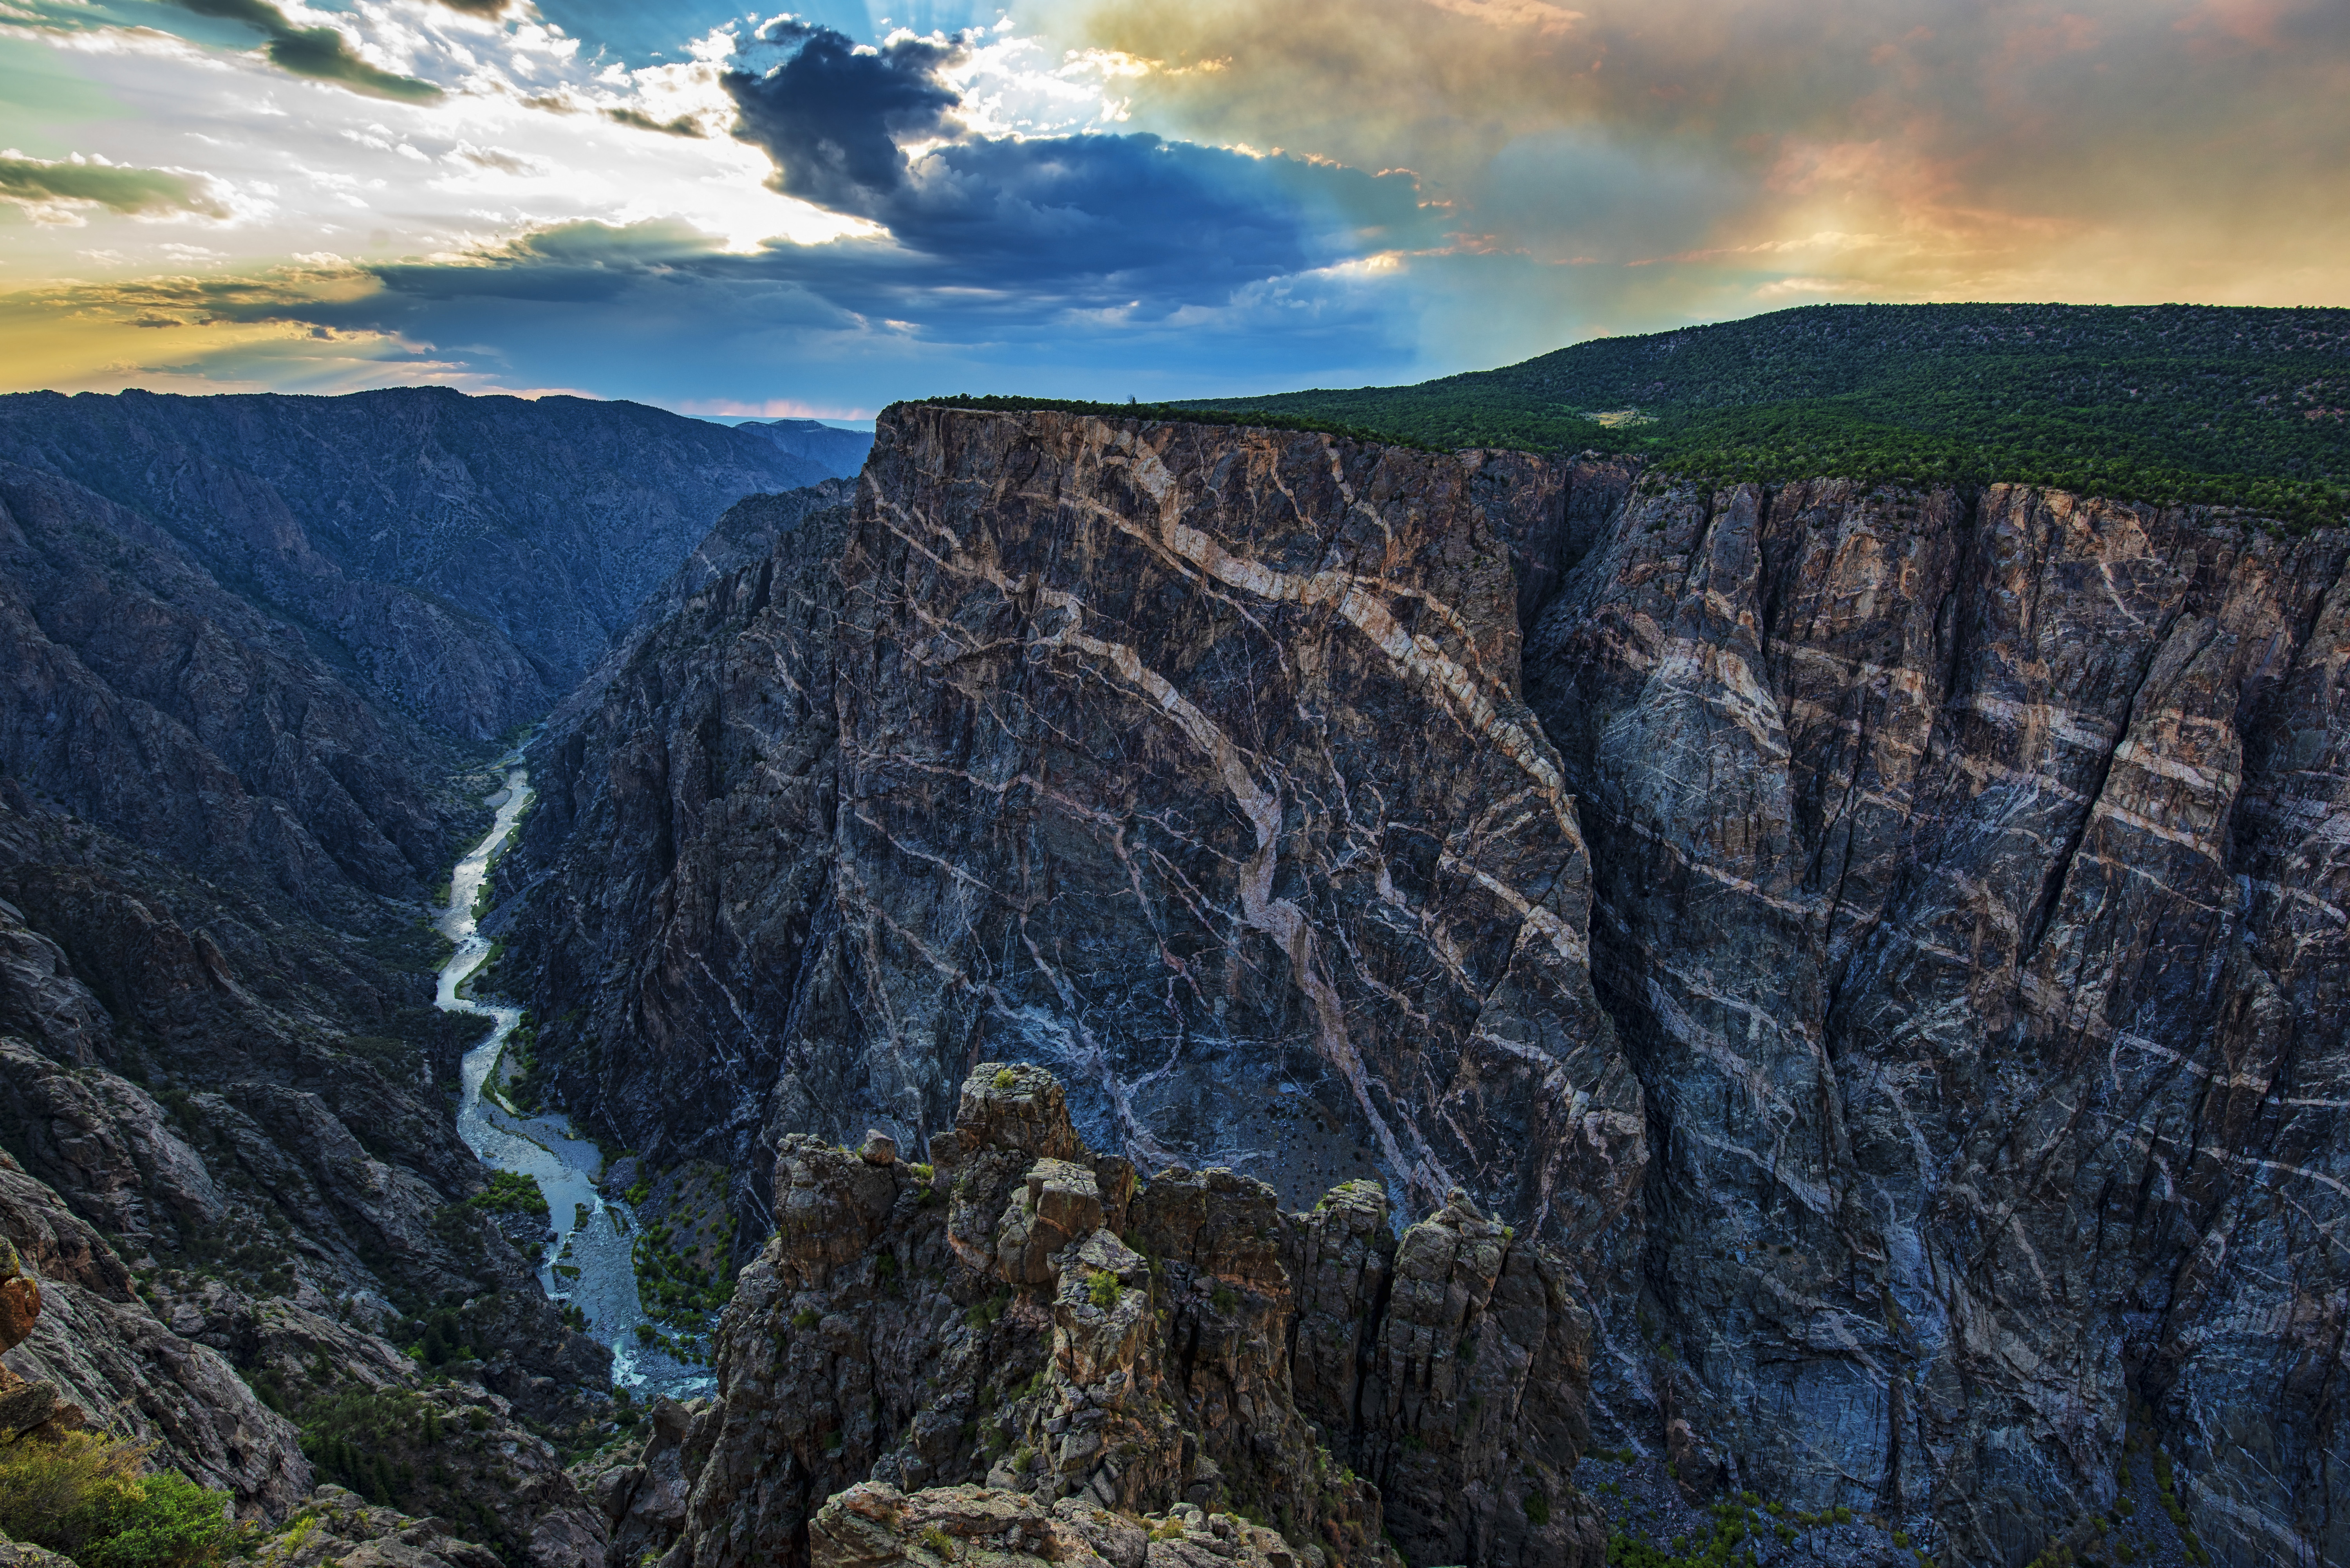 The Gunnison River flowing through Black Canyon National Park in Colorado